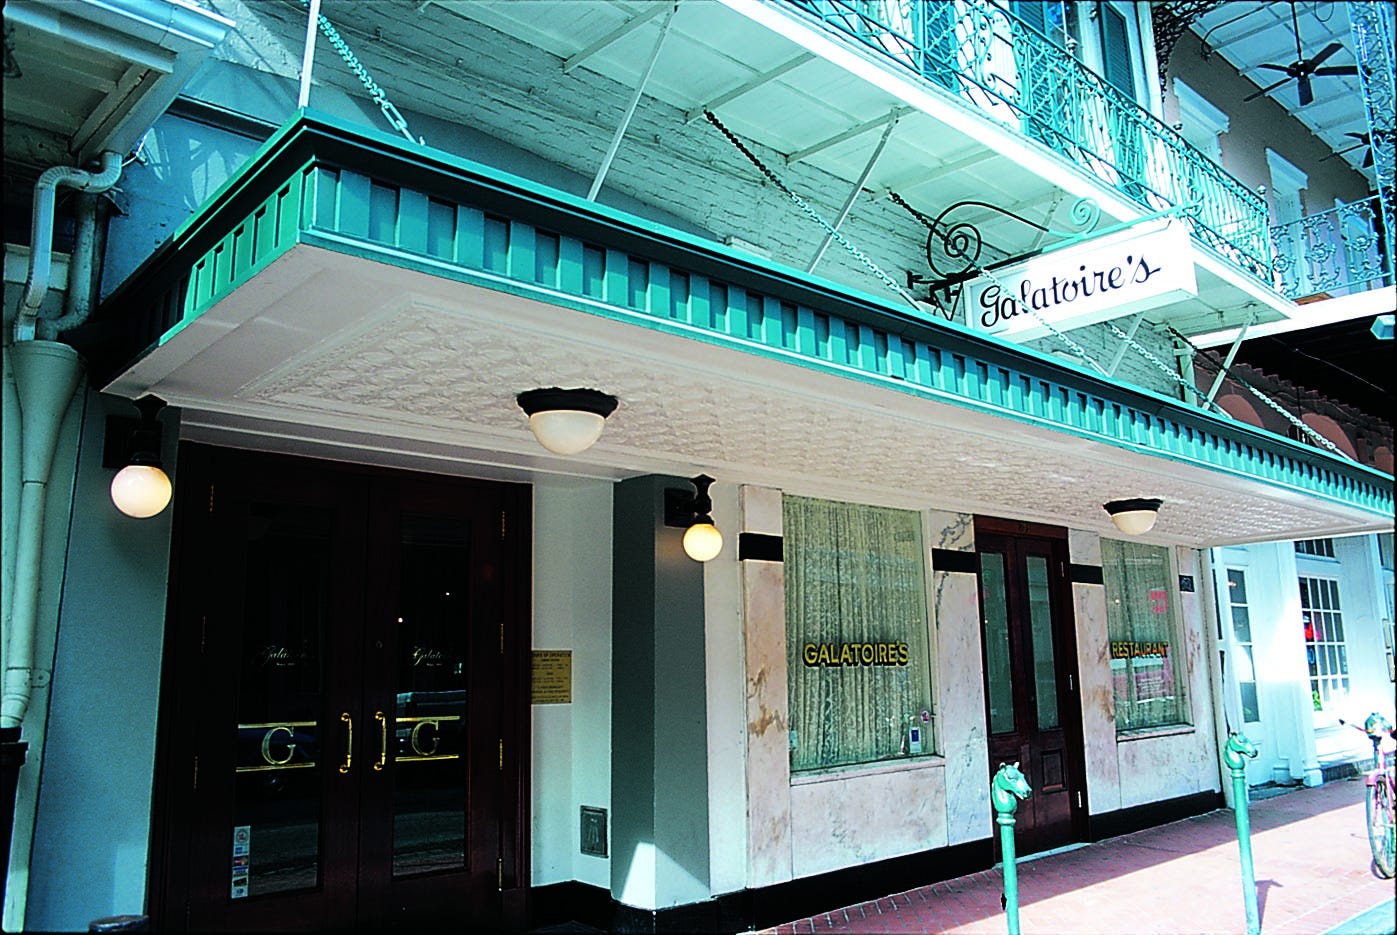 Galatoire's has been a landmark on Bourbon Street since 1905.